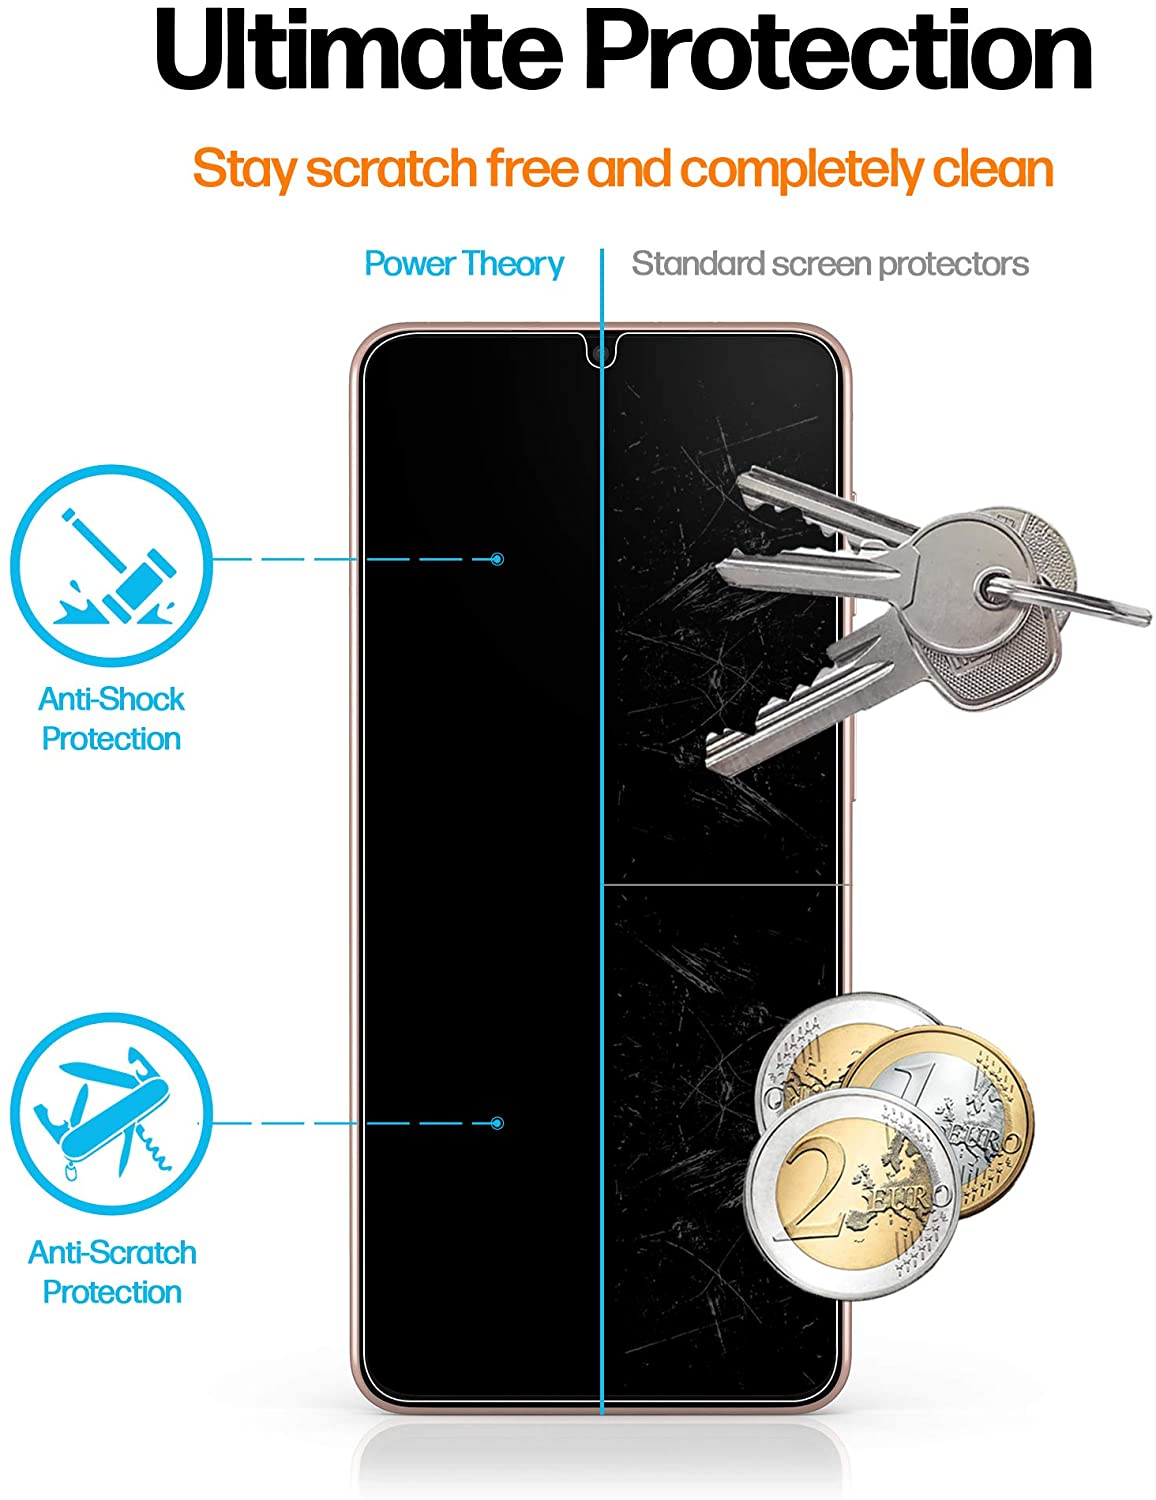 Samsung Galaxy S21 Anti-Scratch Screen Protector Film [2-Pack] Cover